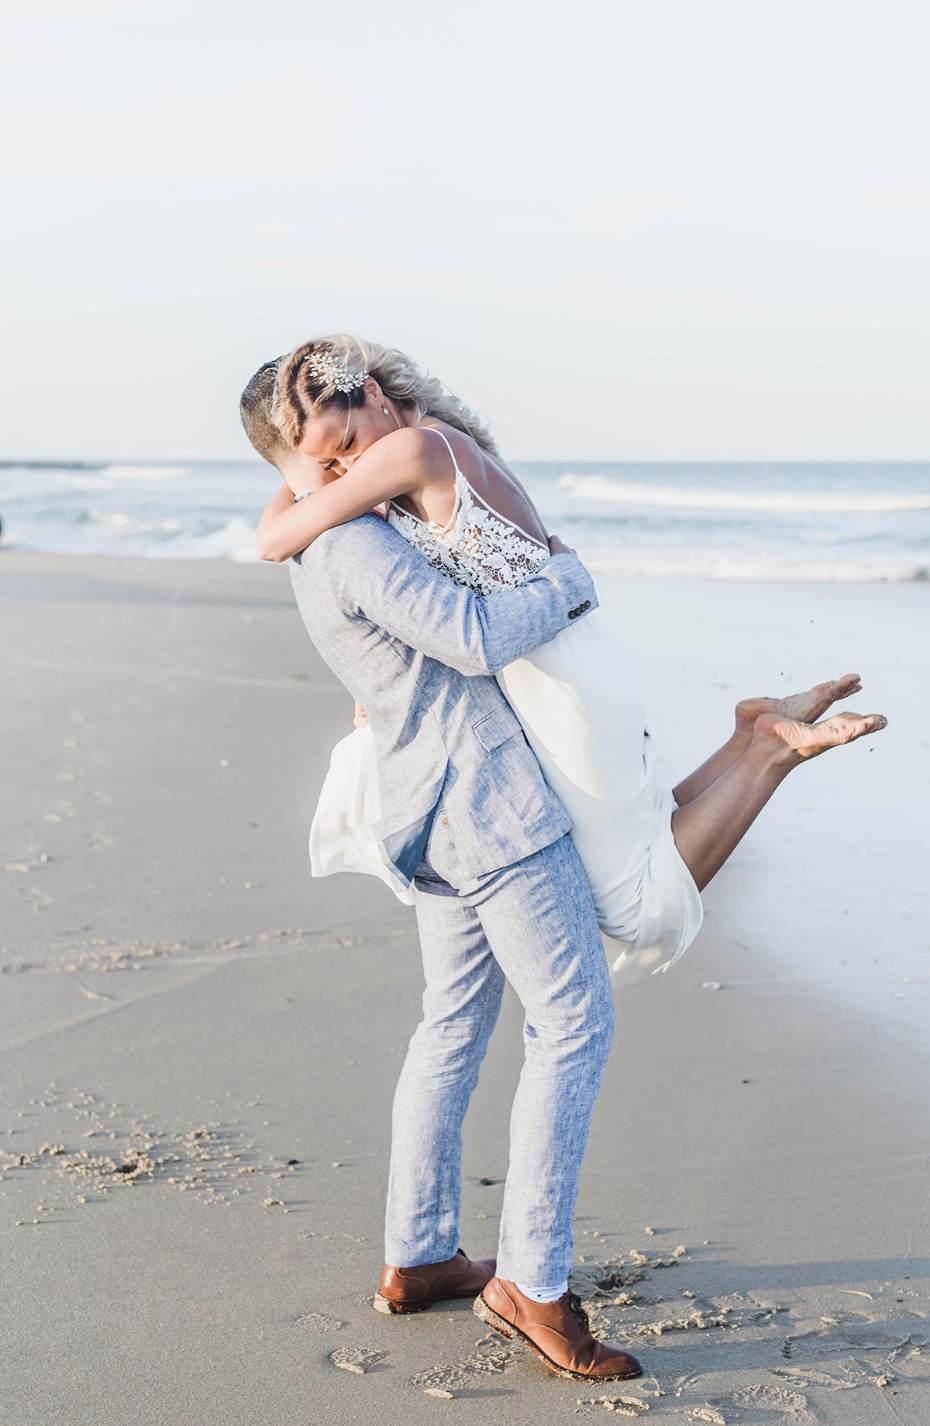 Two Great Ways To Celebrate Your Beachfront Wedding